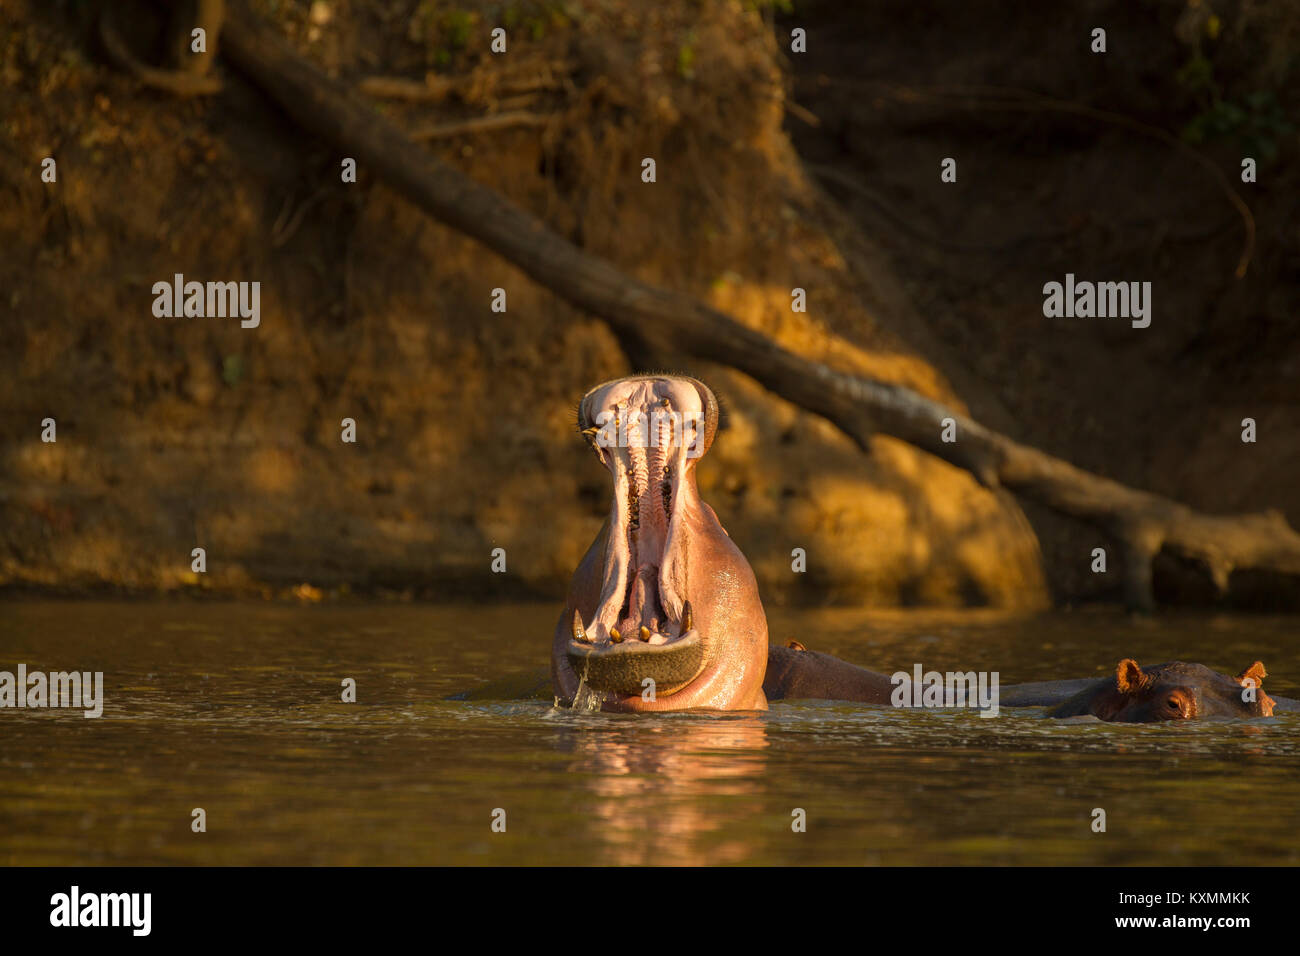 Flusspferd (Hippopotamus amphibius) im Fluss mit offenem Mund, Chirundu, Simbabwe, Afrika Stockfoto